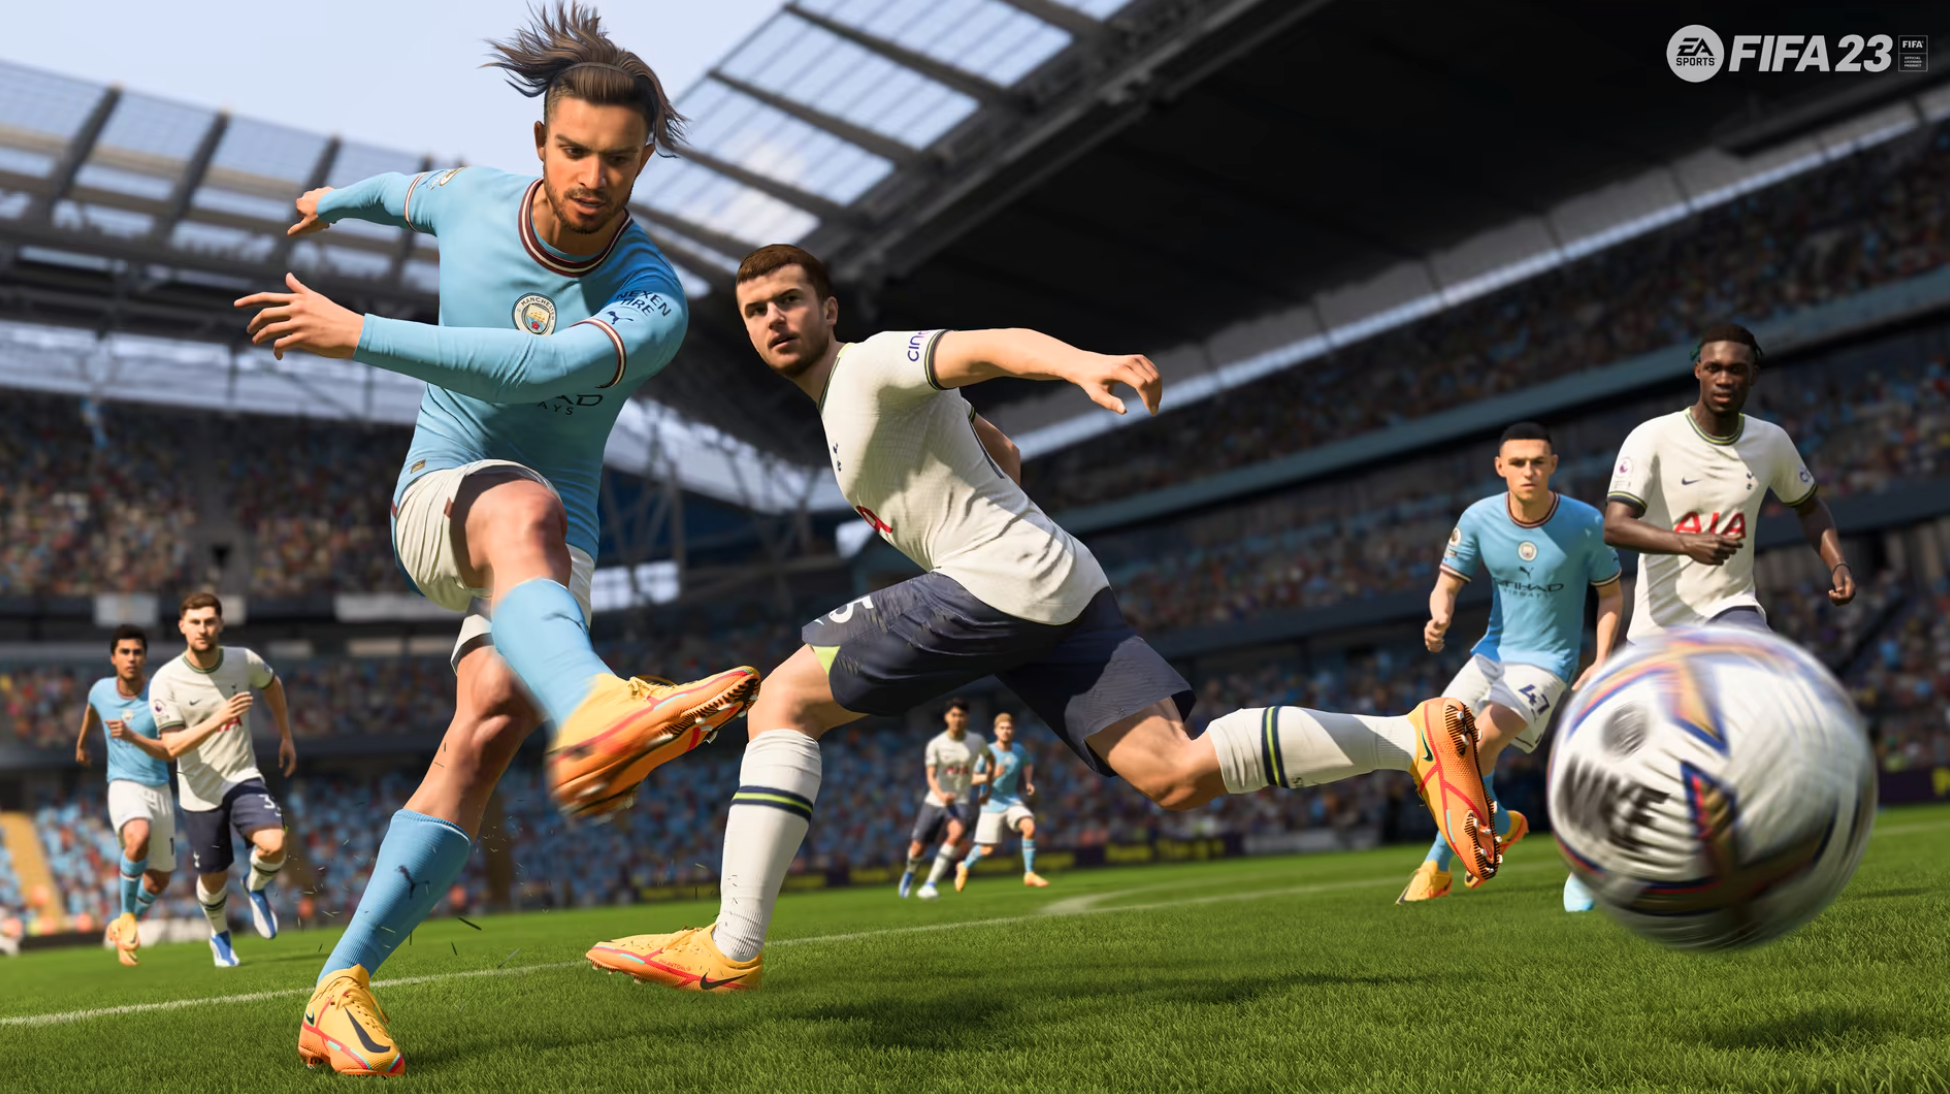 EA la ut «FIFA 23» til en ufattelig pris: – Selvmål